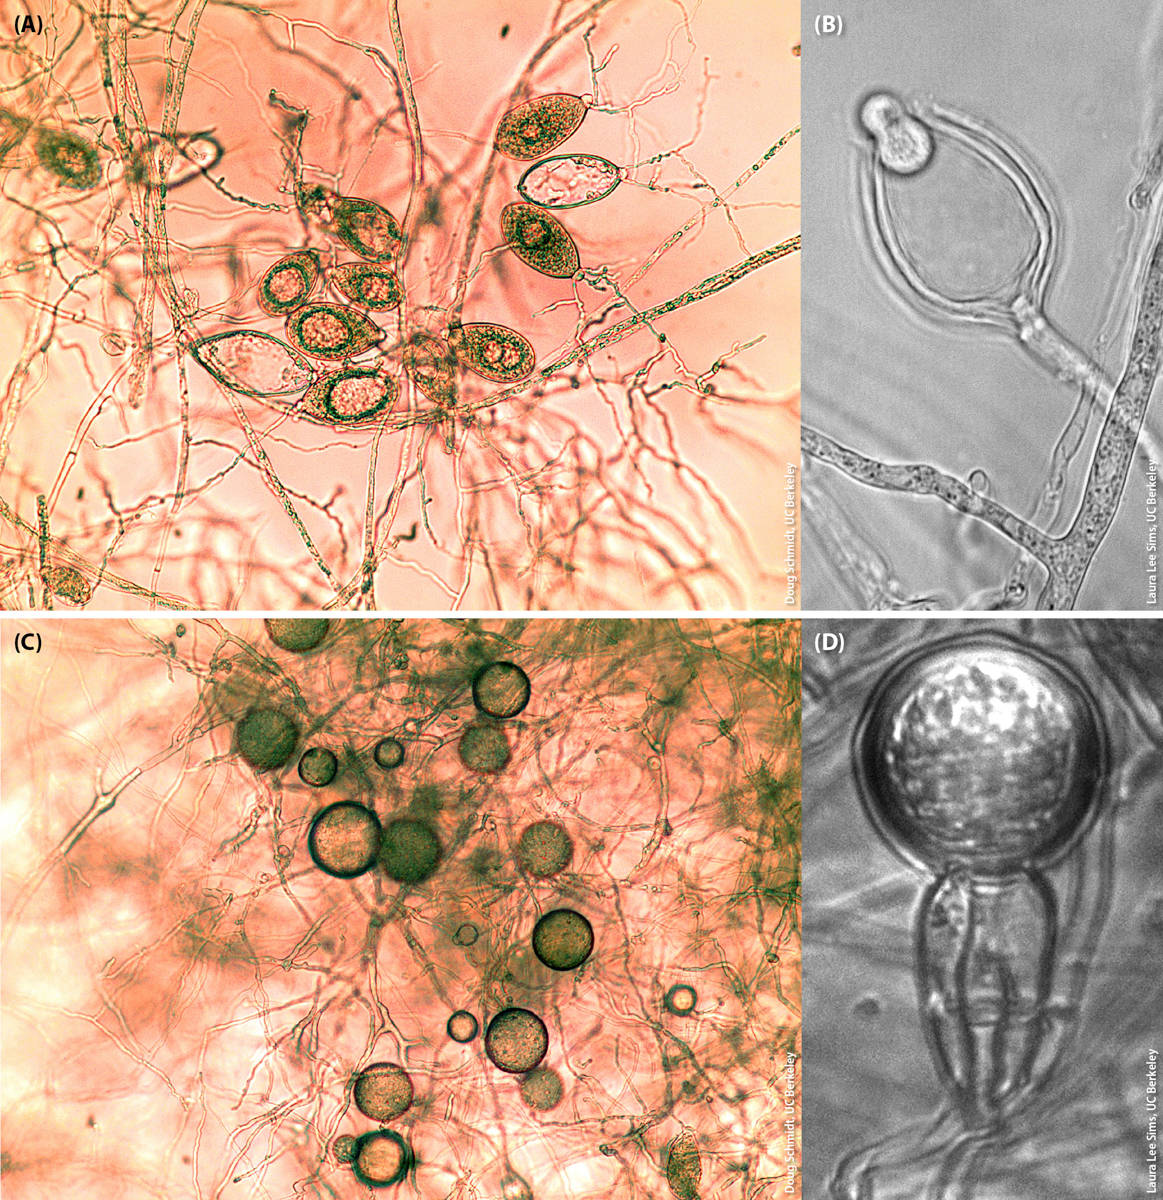 Micrographs (300× magnification) of (A) sporangia of Phytophthora ramorum, (B) a zoospore exiting a sporangium of Phytophthora bilorbang, (C) chlamydospores of Phytophthora ramorum and (D) an oospore of Phytophthora alni subspecies uniformis.